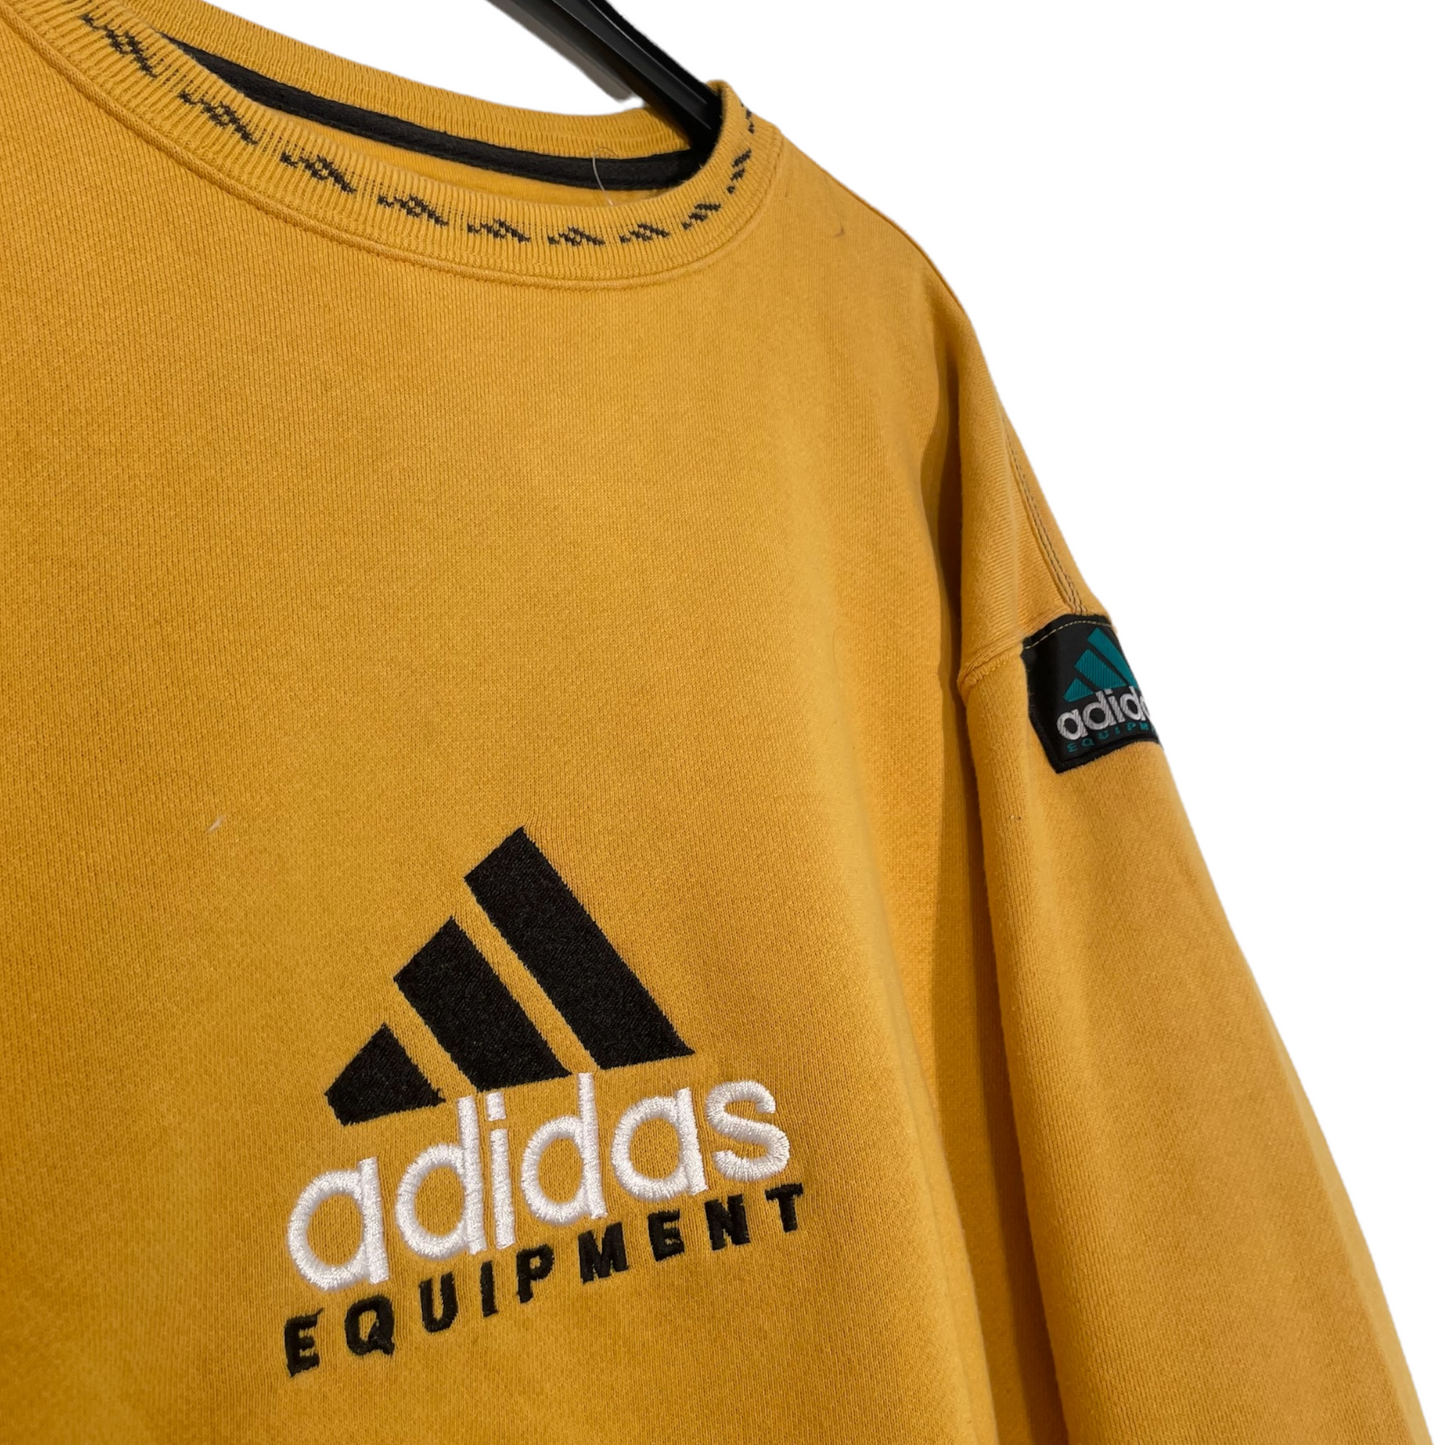 Adidas equipment sweatshirt